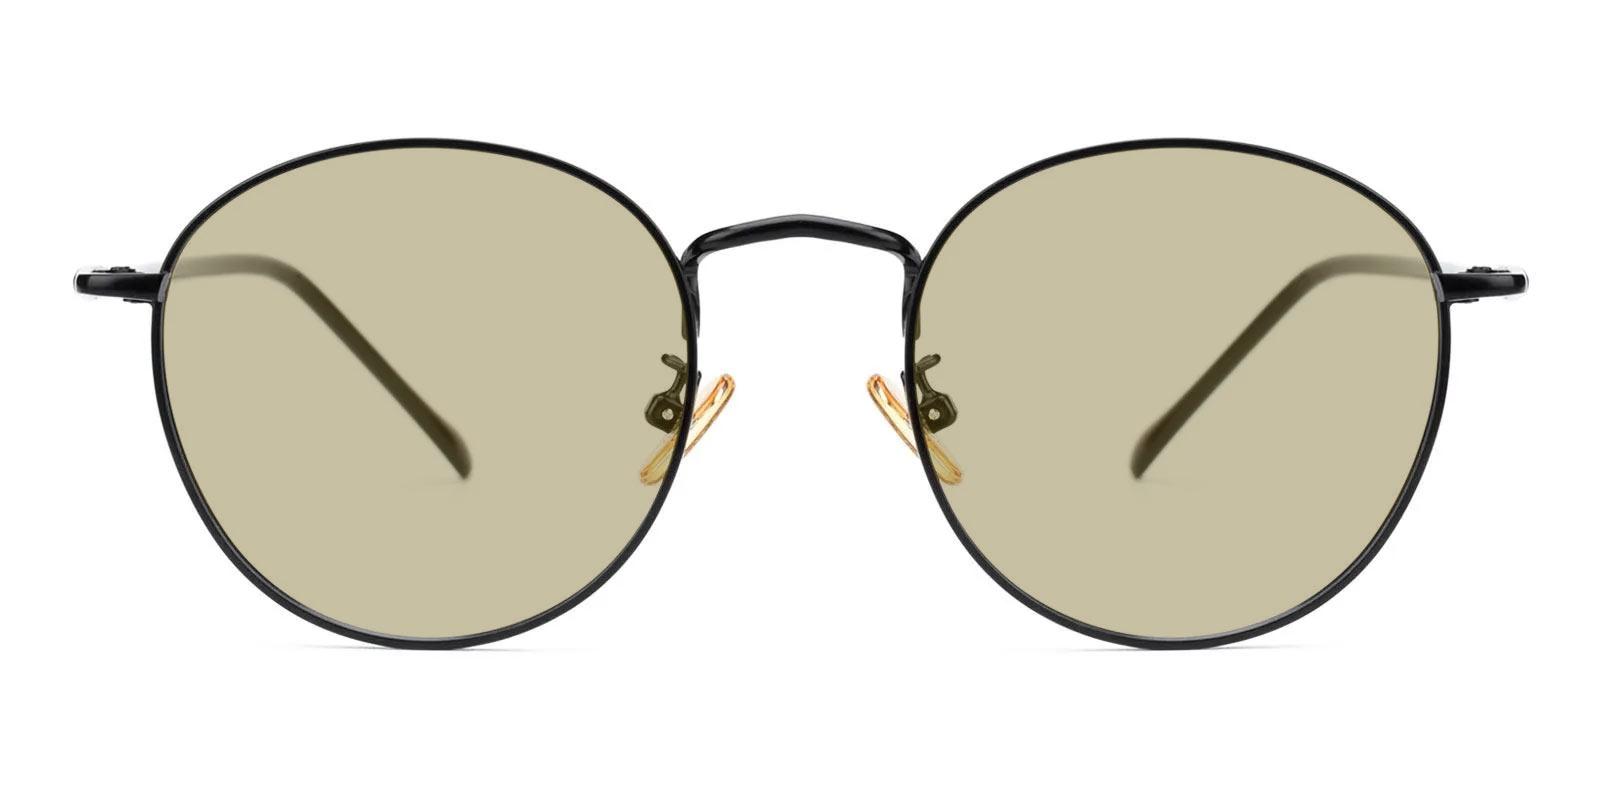 Donuts-Black-Round-Metal-Sunglasses-detail